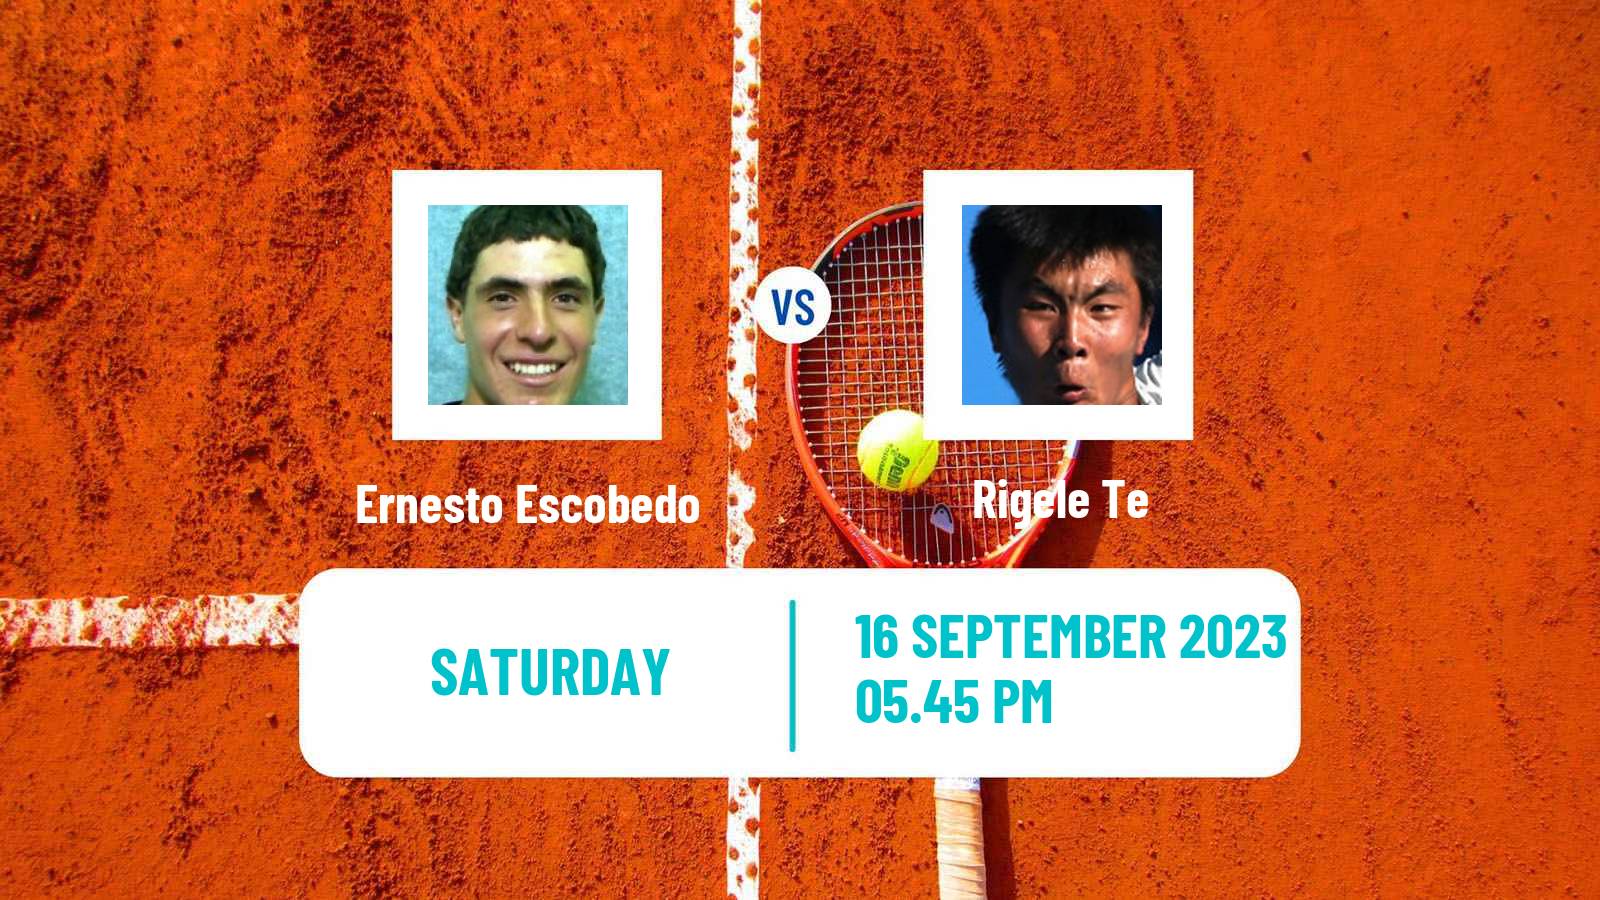 Tennis Davis Cup World Group II Ernesto Escobedo - Rigele Te